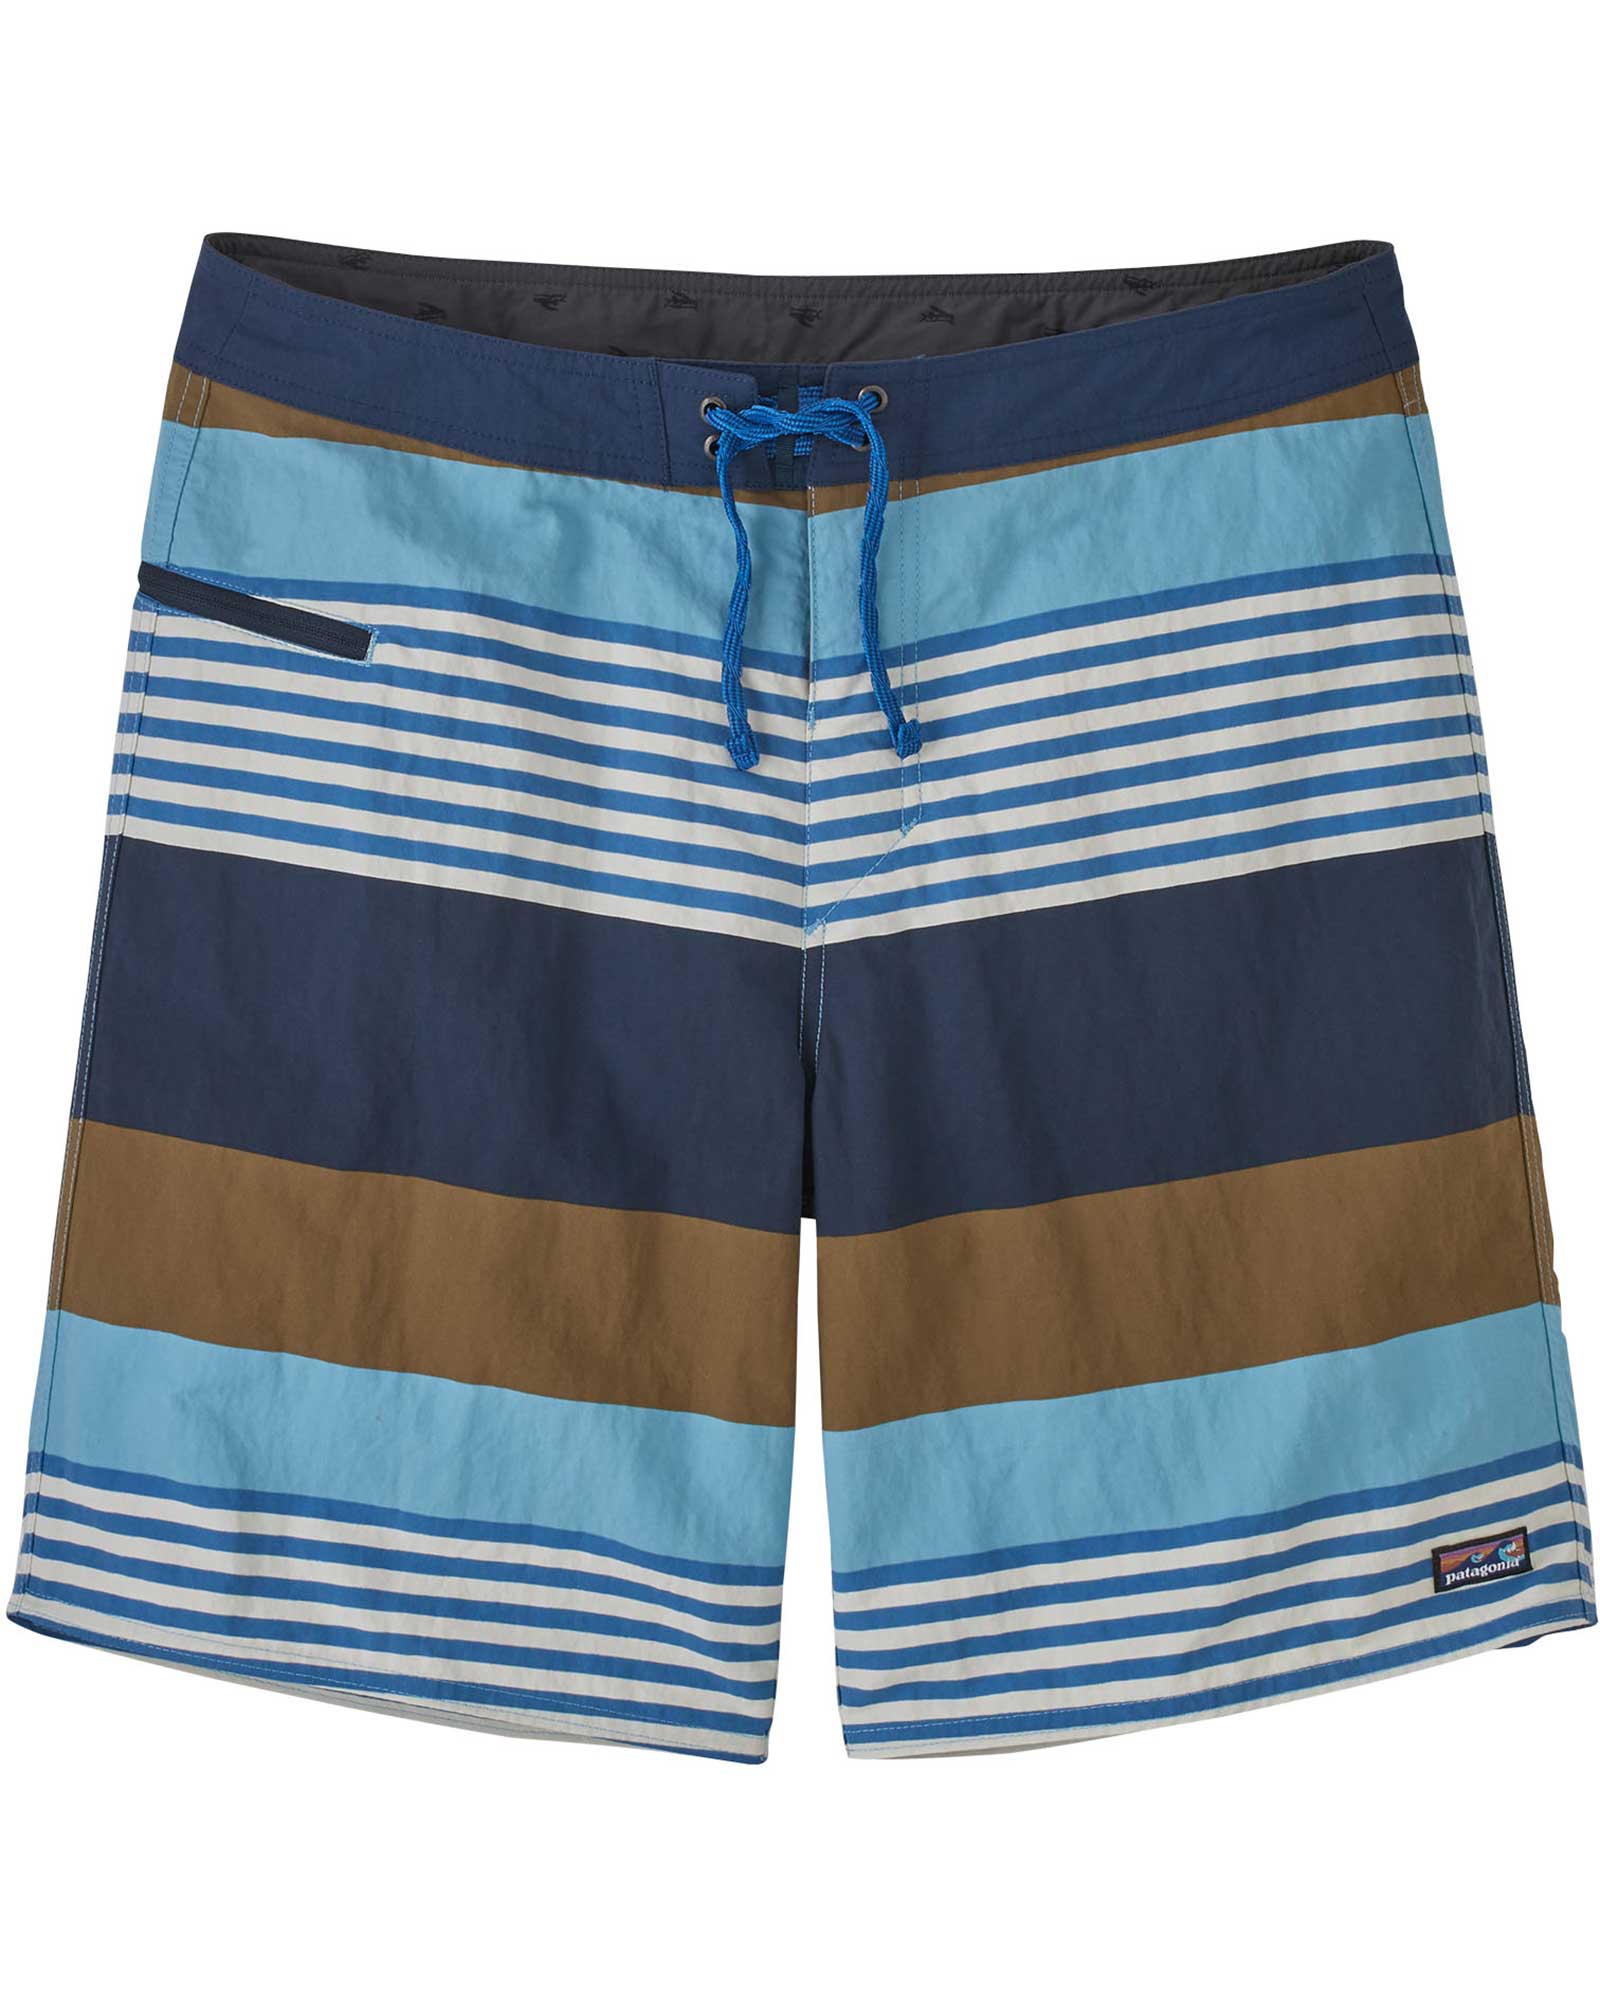 Patagonia Wavefarer Men’s 19" Board Shorts - Lago Blue/Fitz Stripe 34"